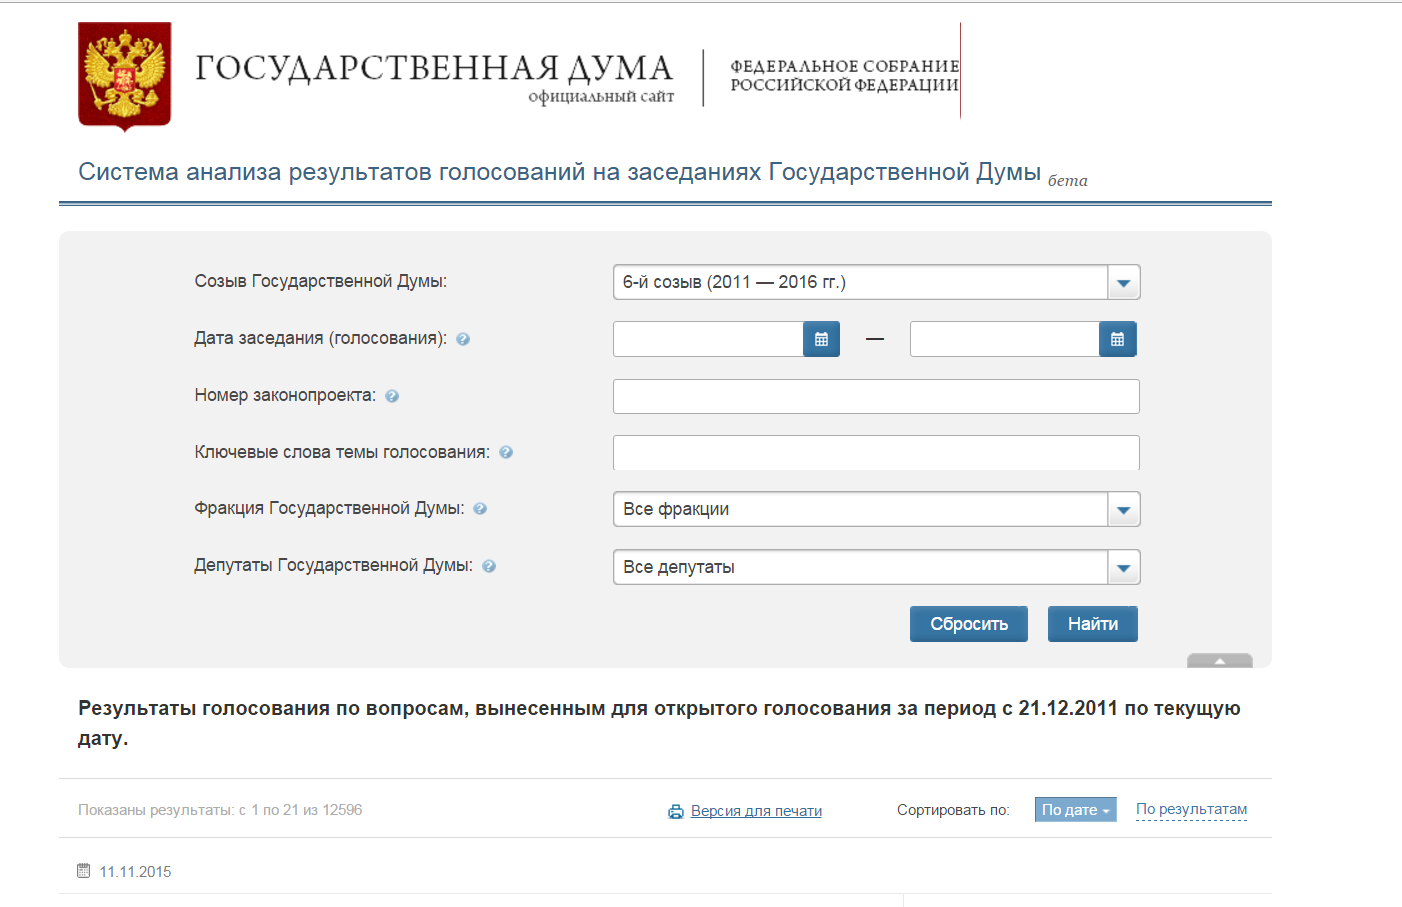 Gov ru карт. Регистрационный номер законопроекта от Госдумы. Http://vote.Duma.gov.ru/vote/117112.